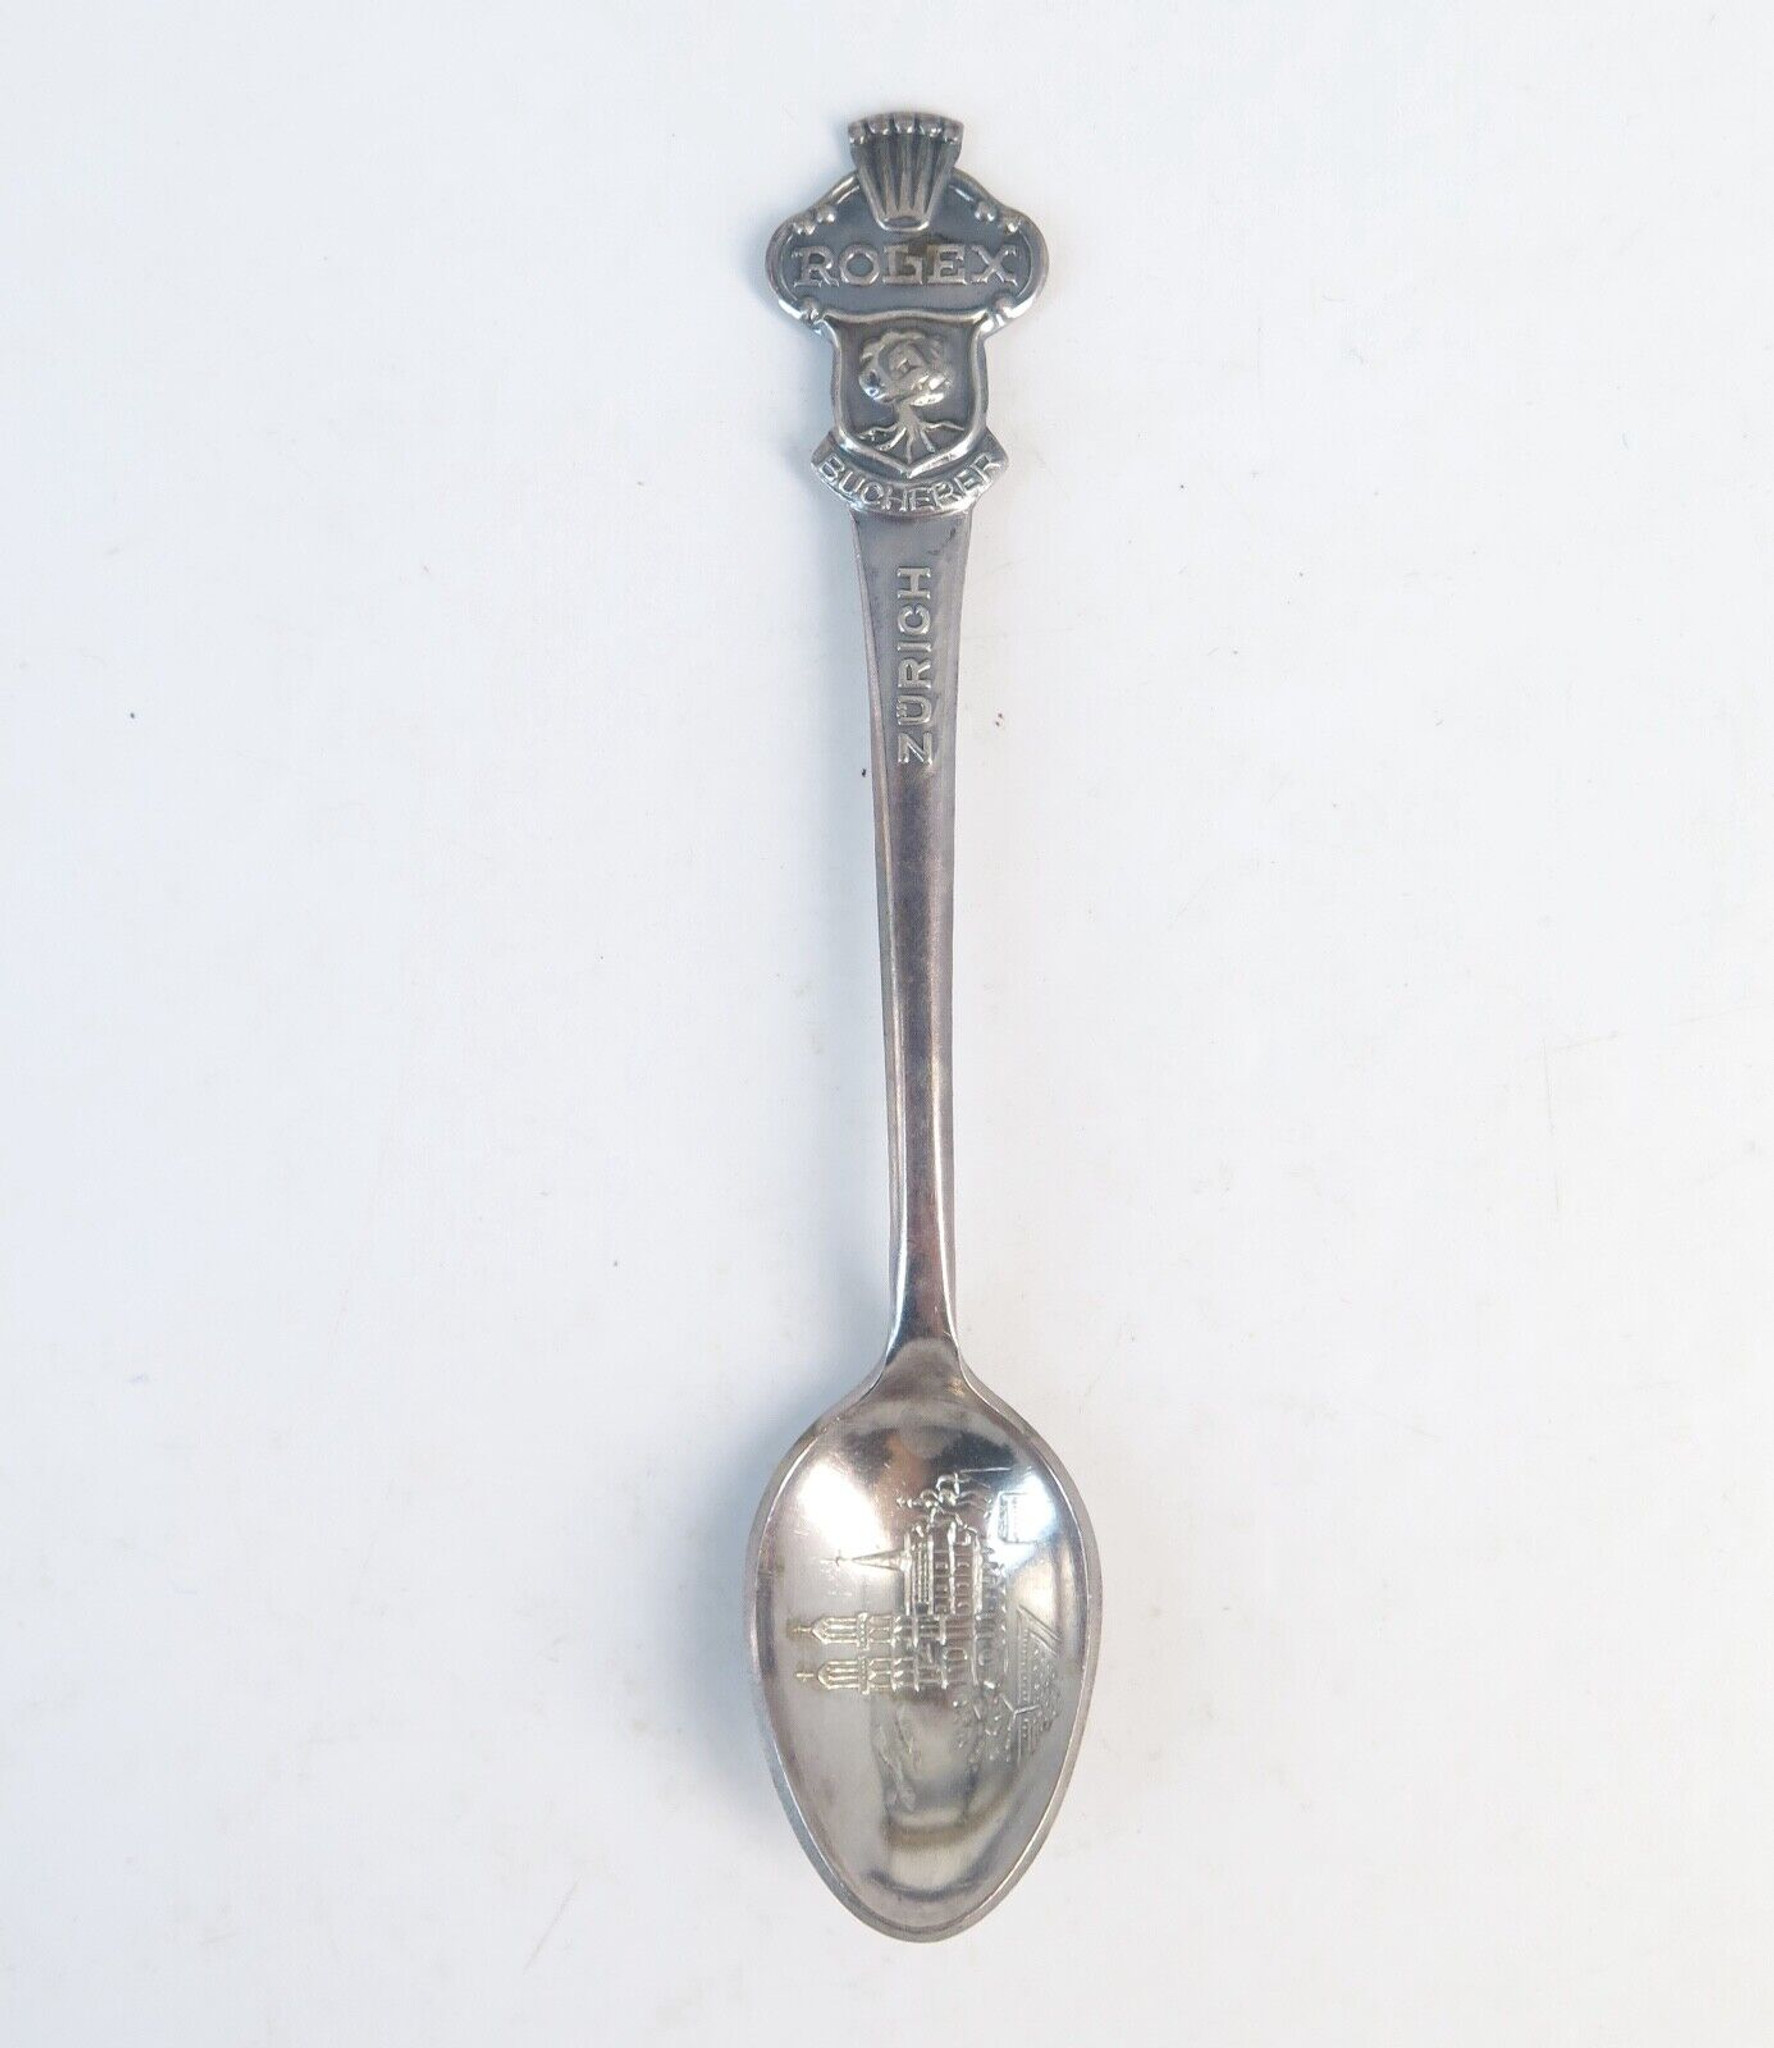 Rolex Bucherer Collectable Souvenir Spoon - Zurich - Harrington & Co.